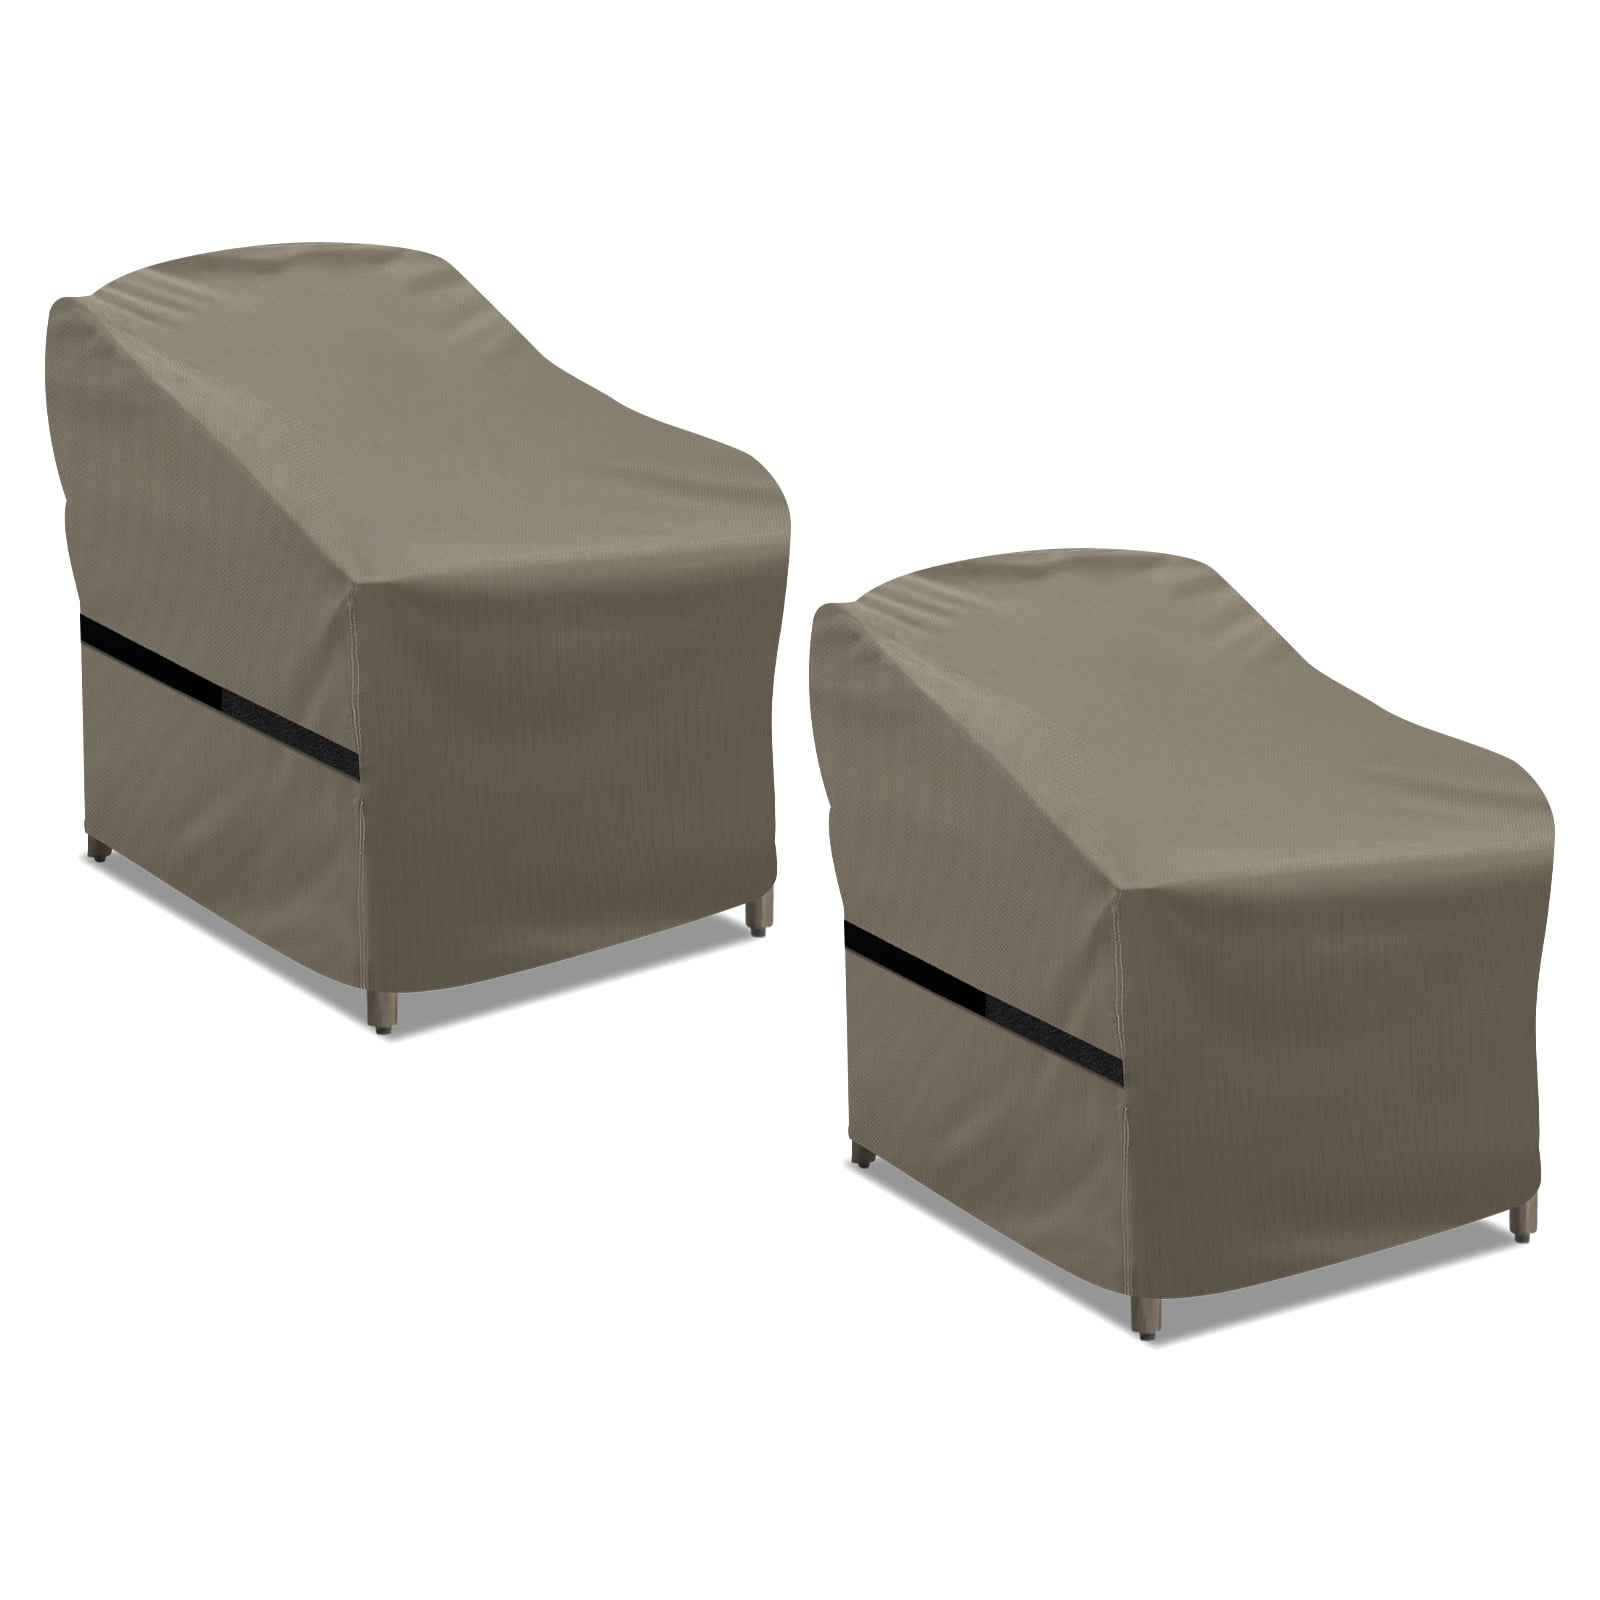 GARPROVM Patio Chair Covers 2 Pack, 600D Heavy Duty Waterproof